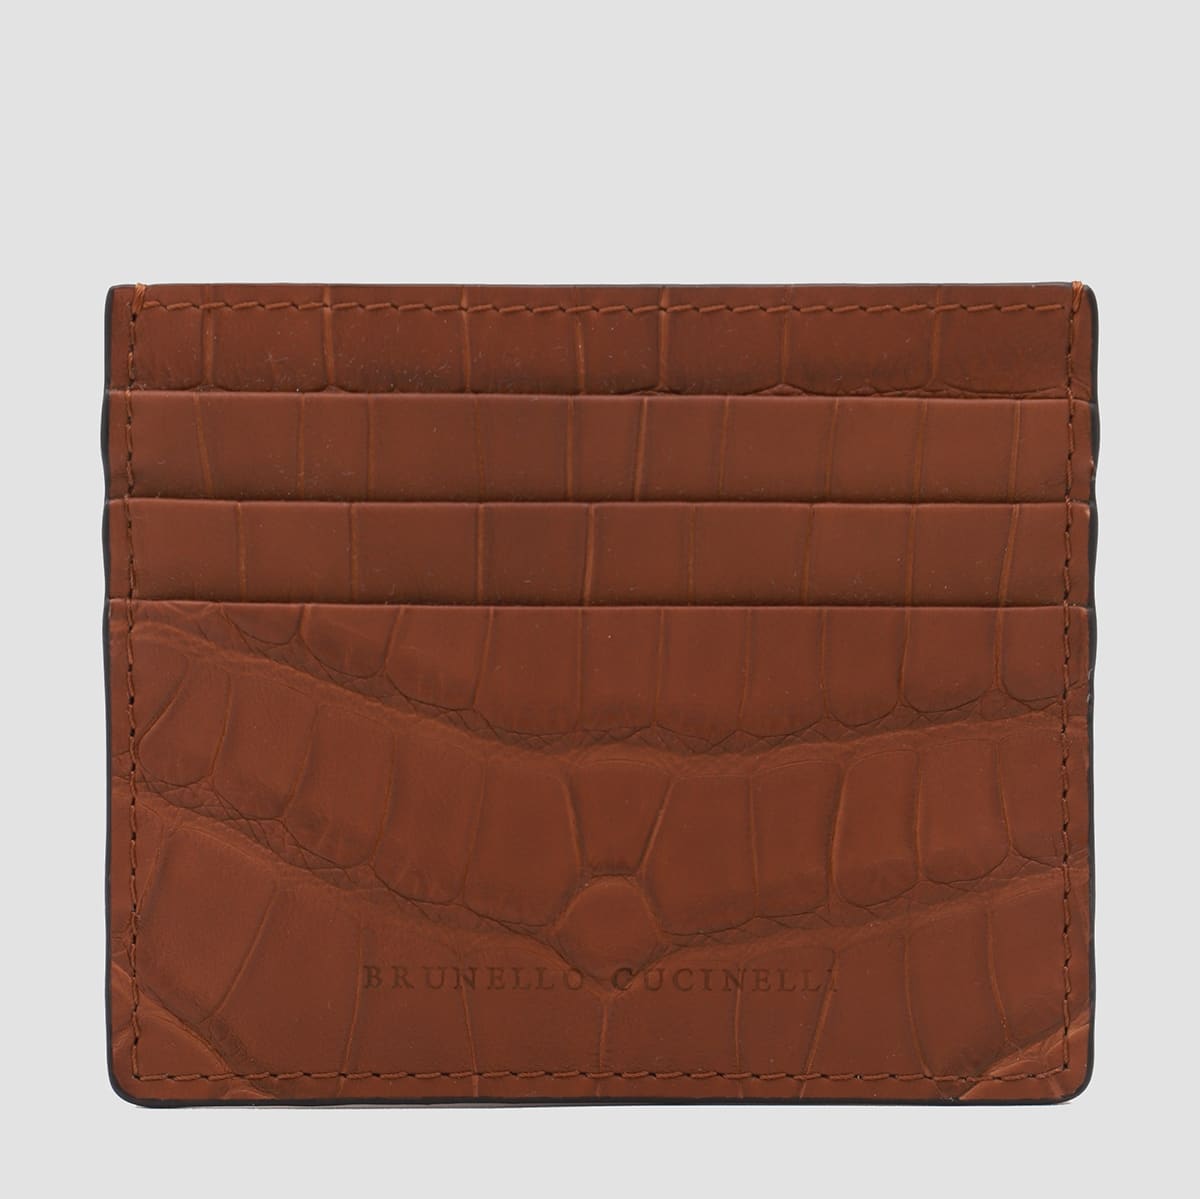 Brown Leather Cardholder